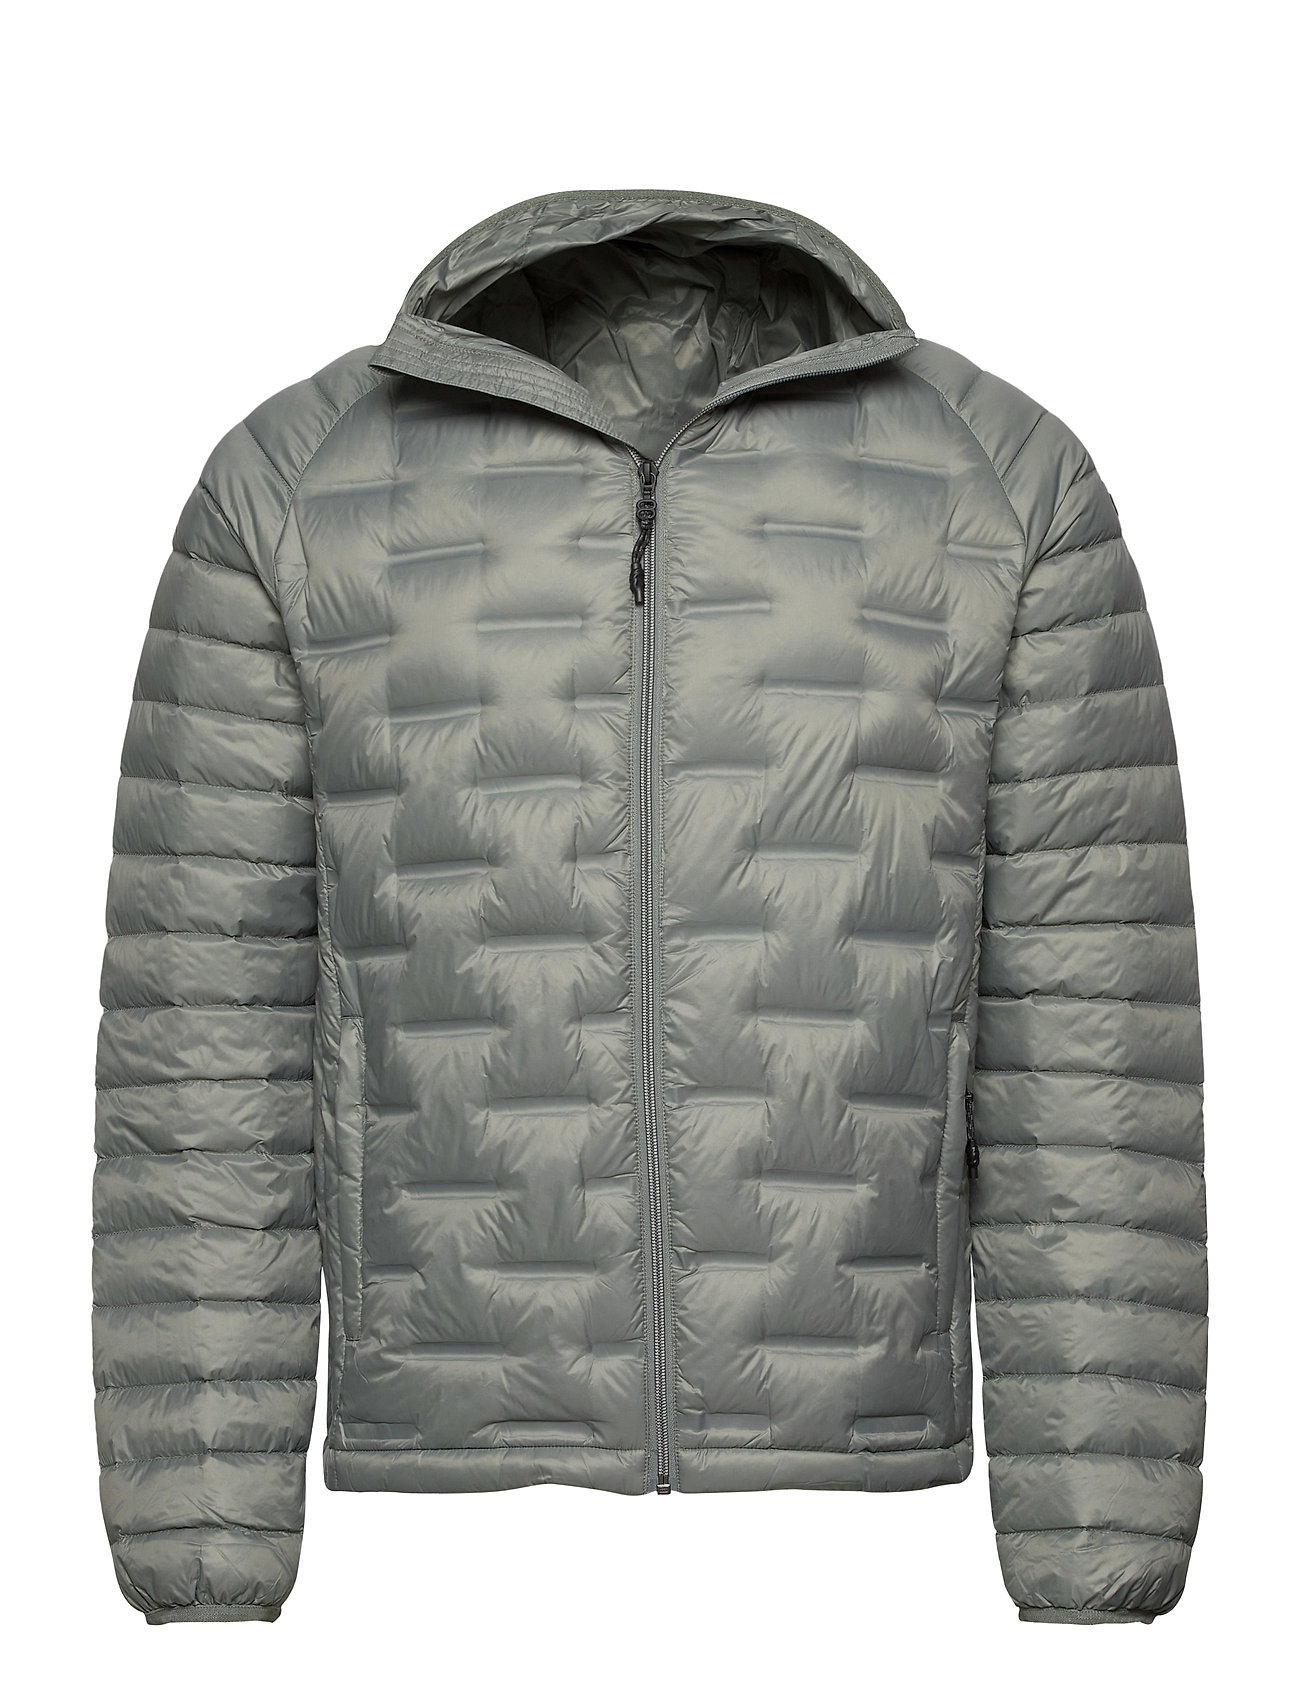 Convert Jacket Outerwear Sport Jackets Harmaa 8848 Altitude